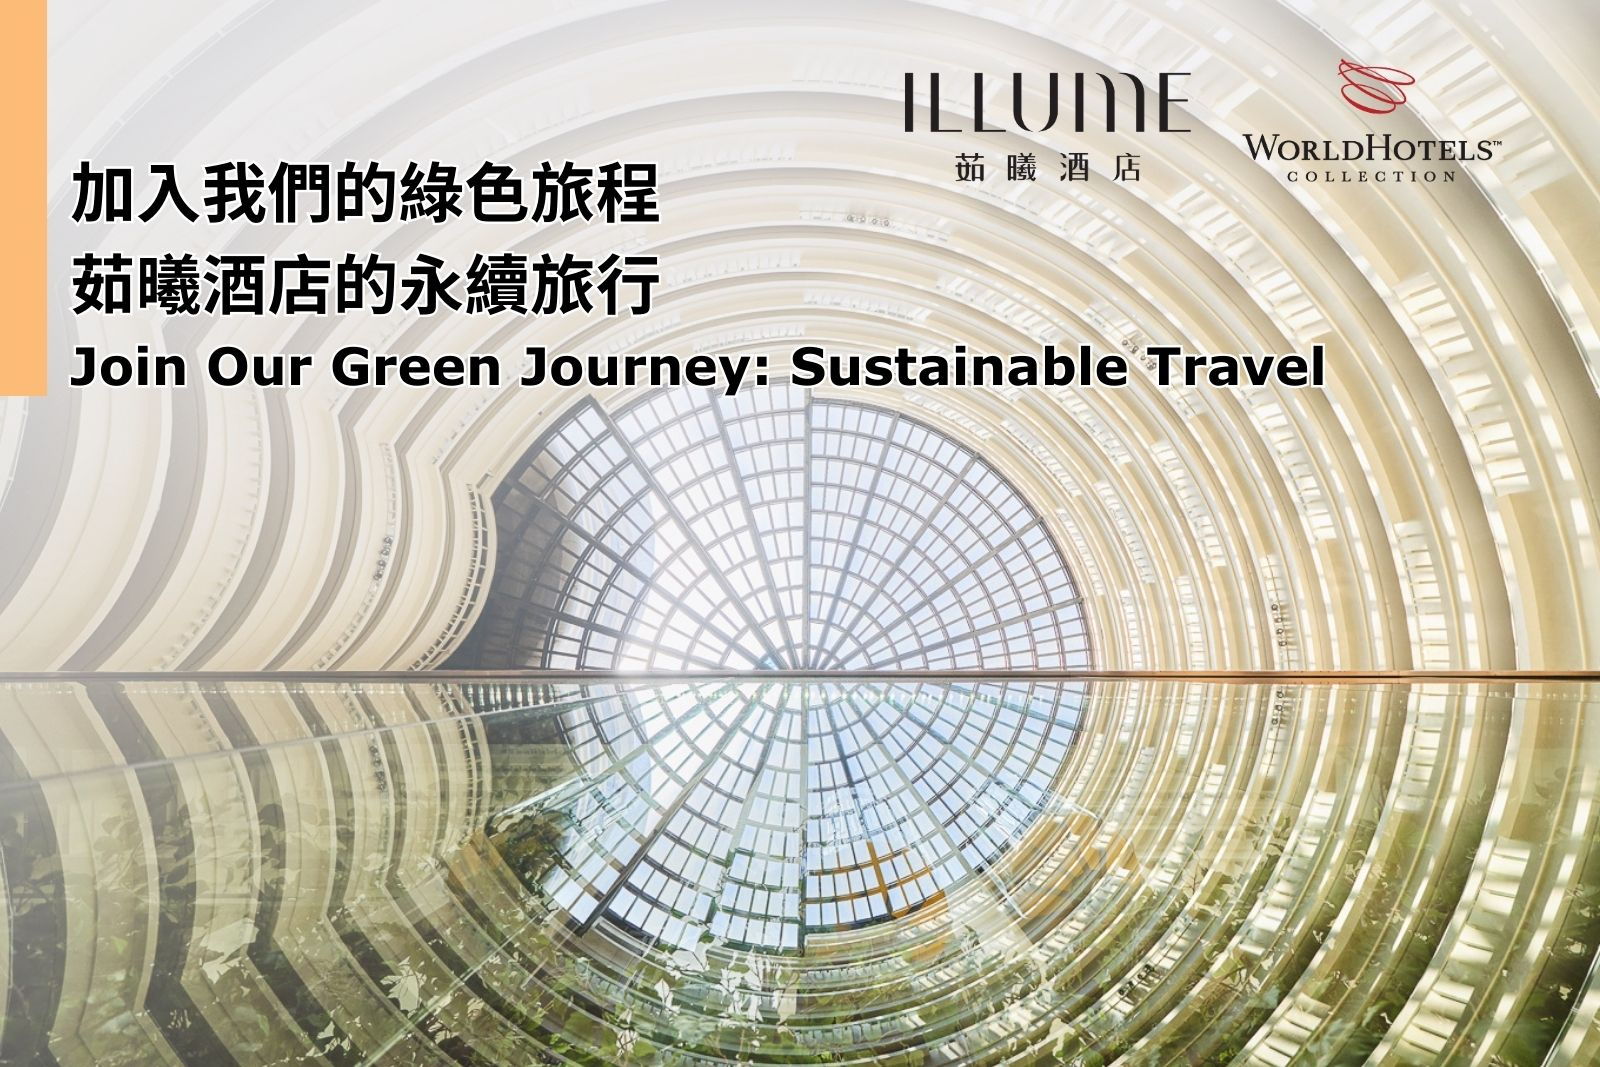 Join Our Green Journey: Sustainable Travel at ILLUME TAIPEI.